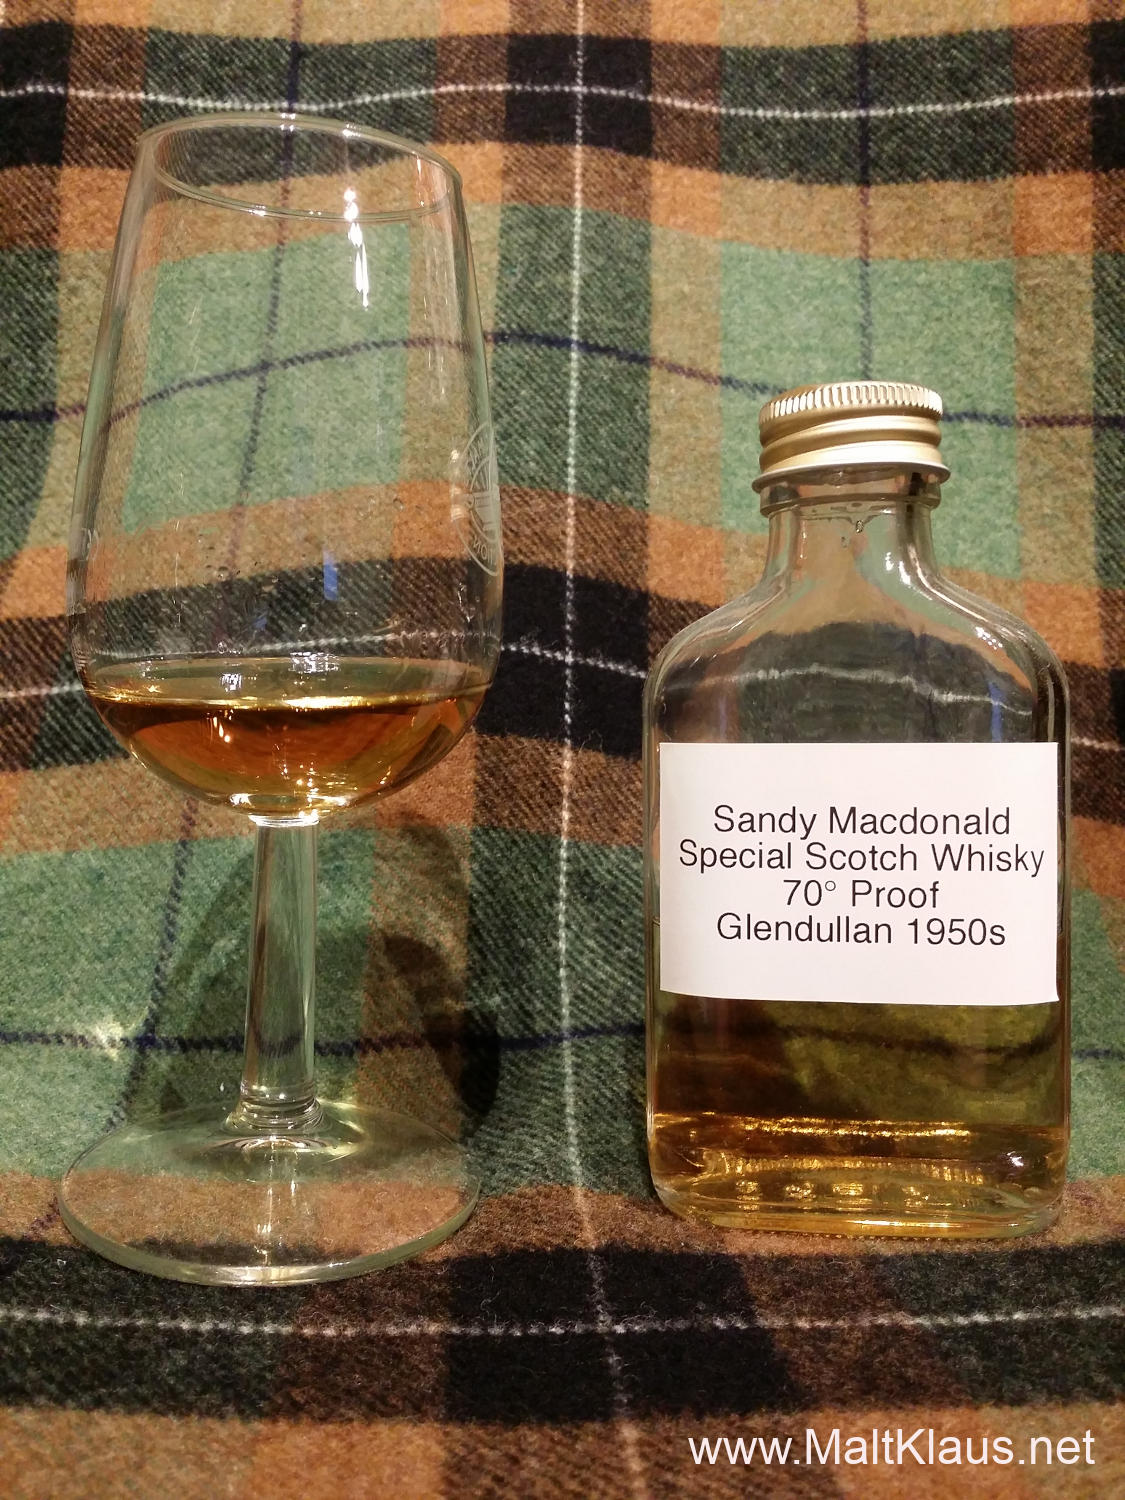 Sandy Macdonald Special Scotch Whisky Blend 1950s - Glendullan